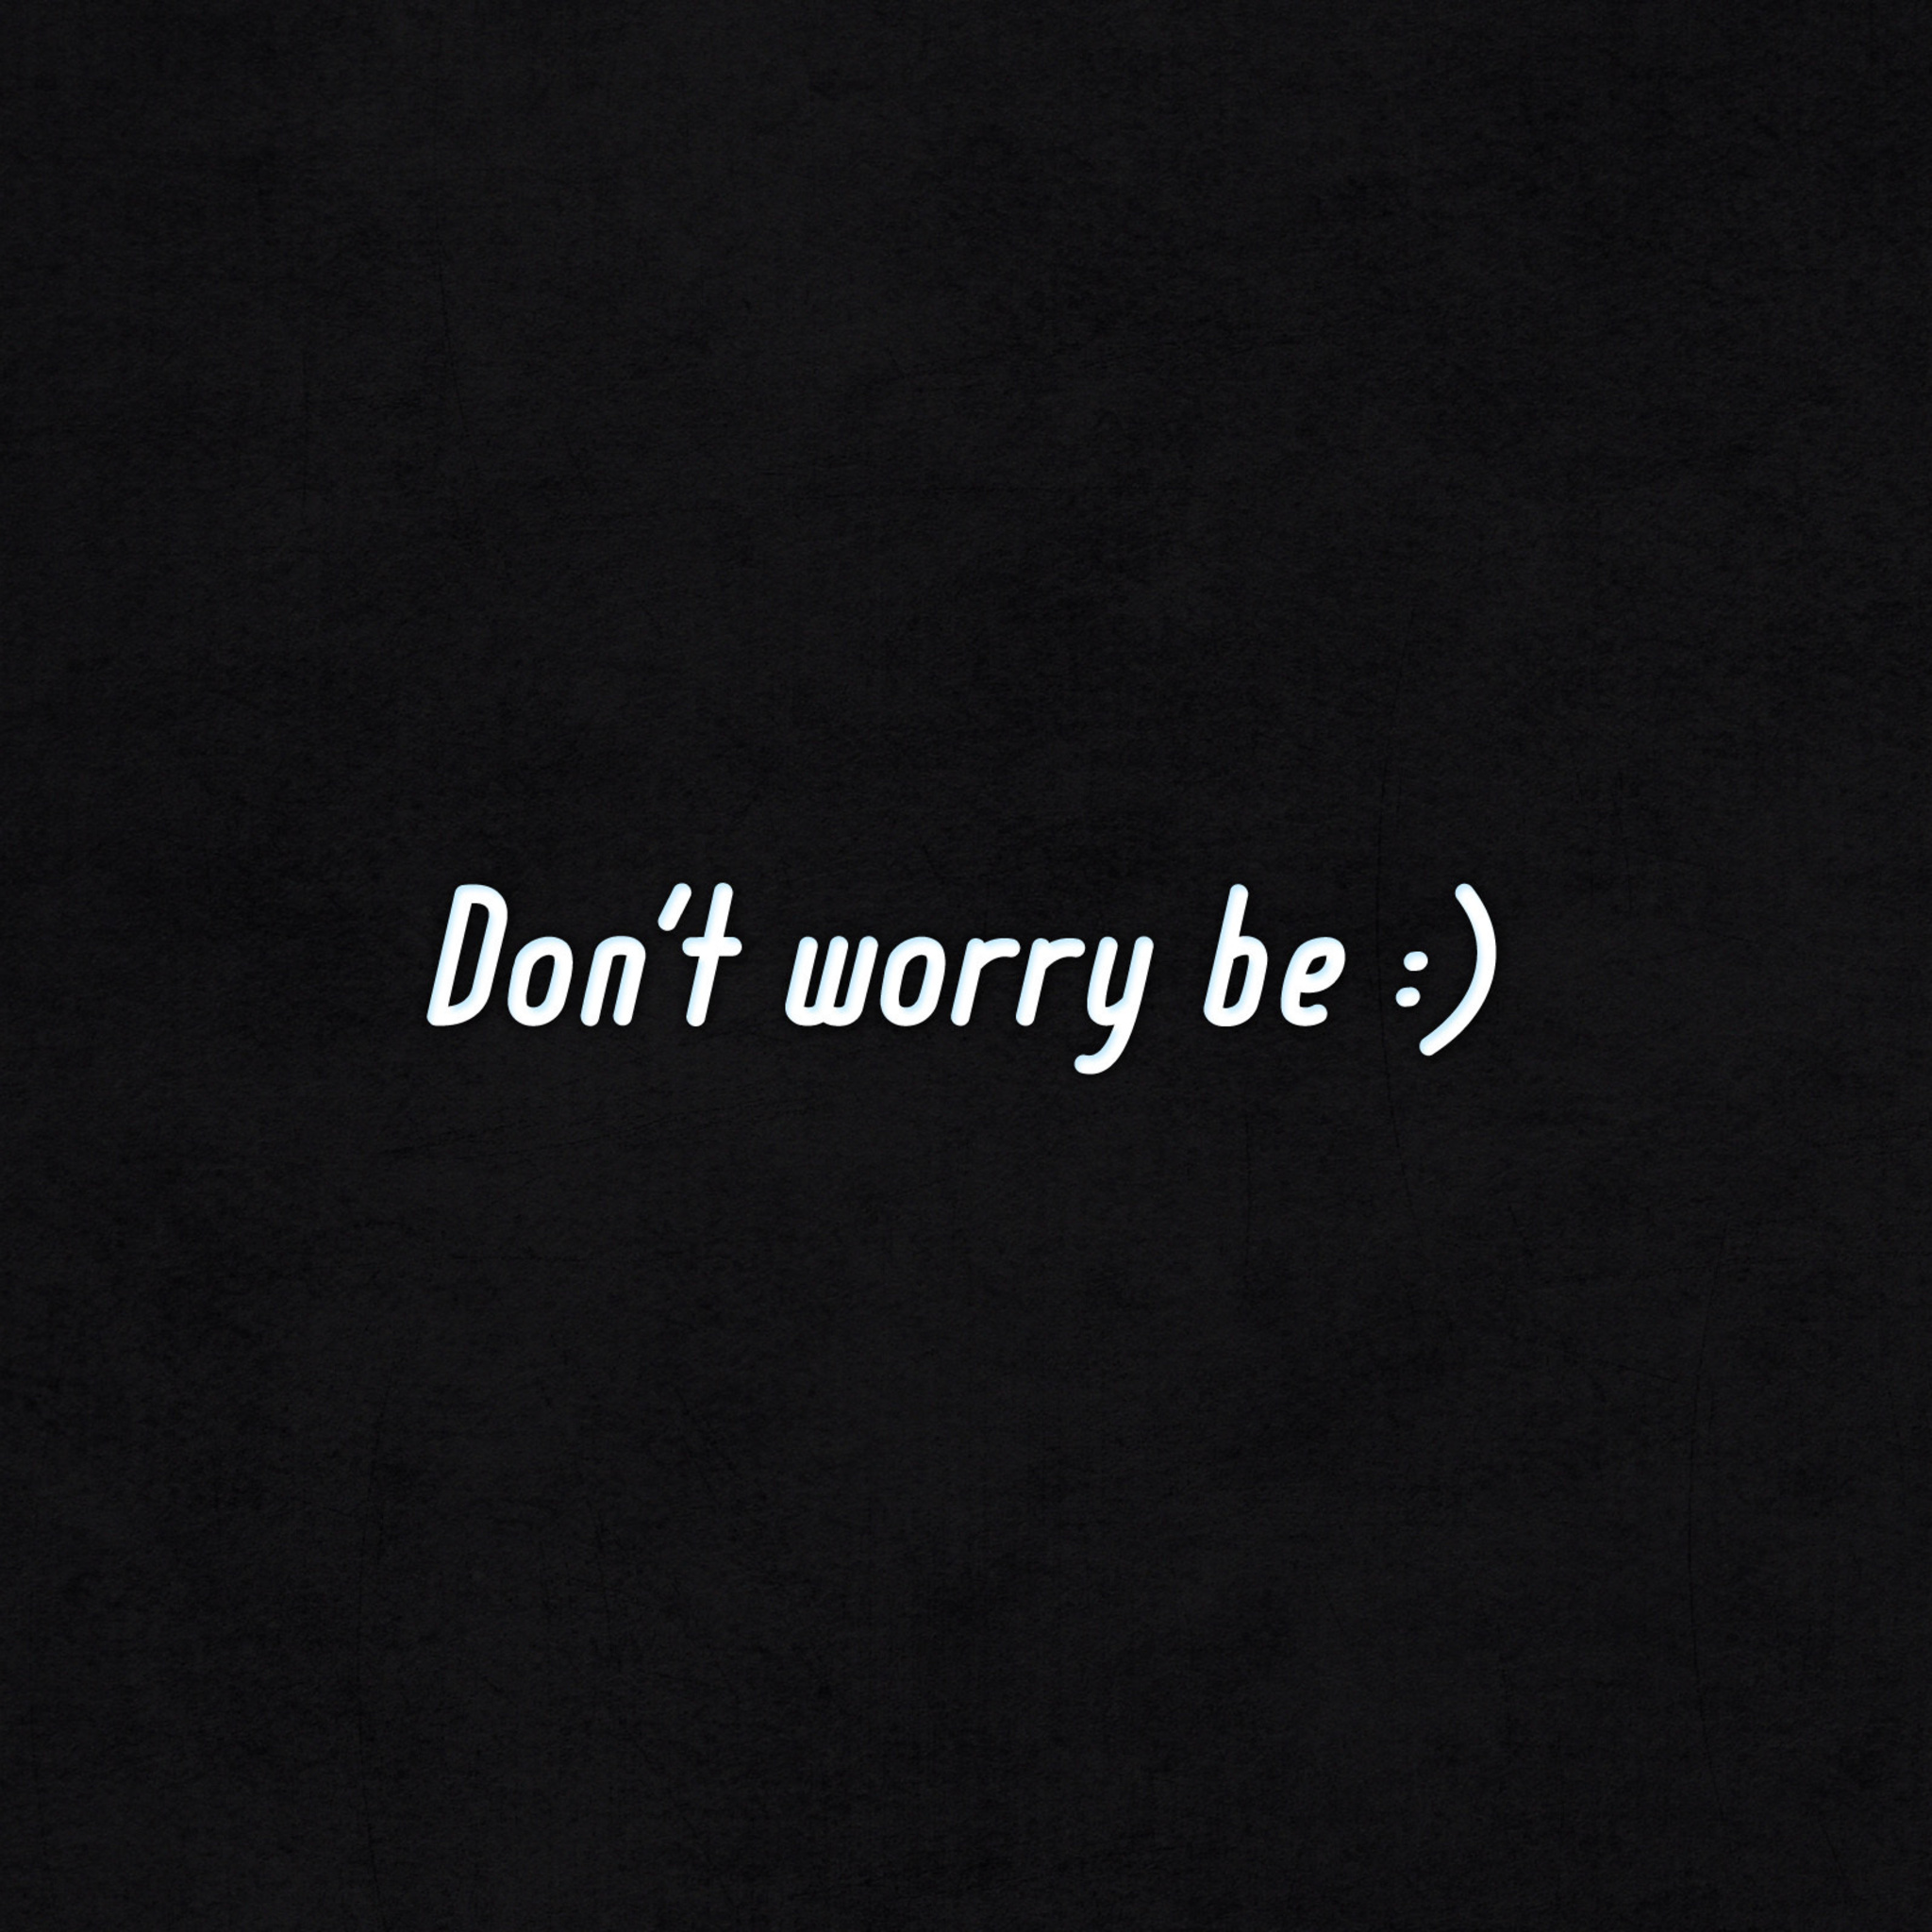 dont-worry-be-happy.jpg